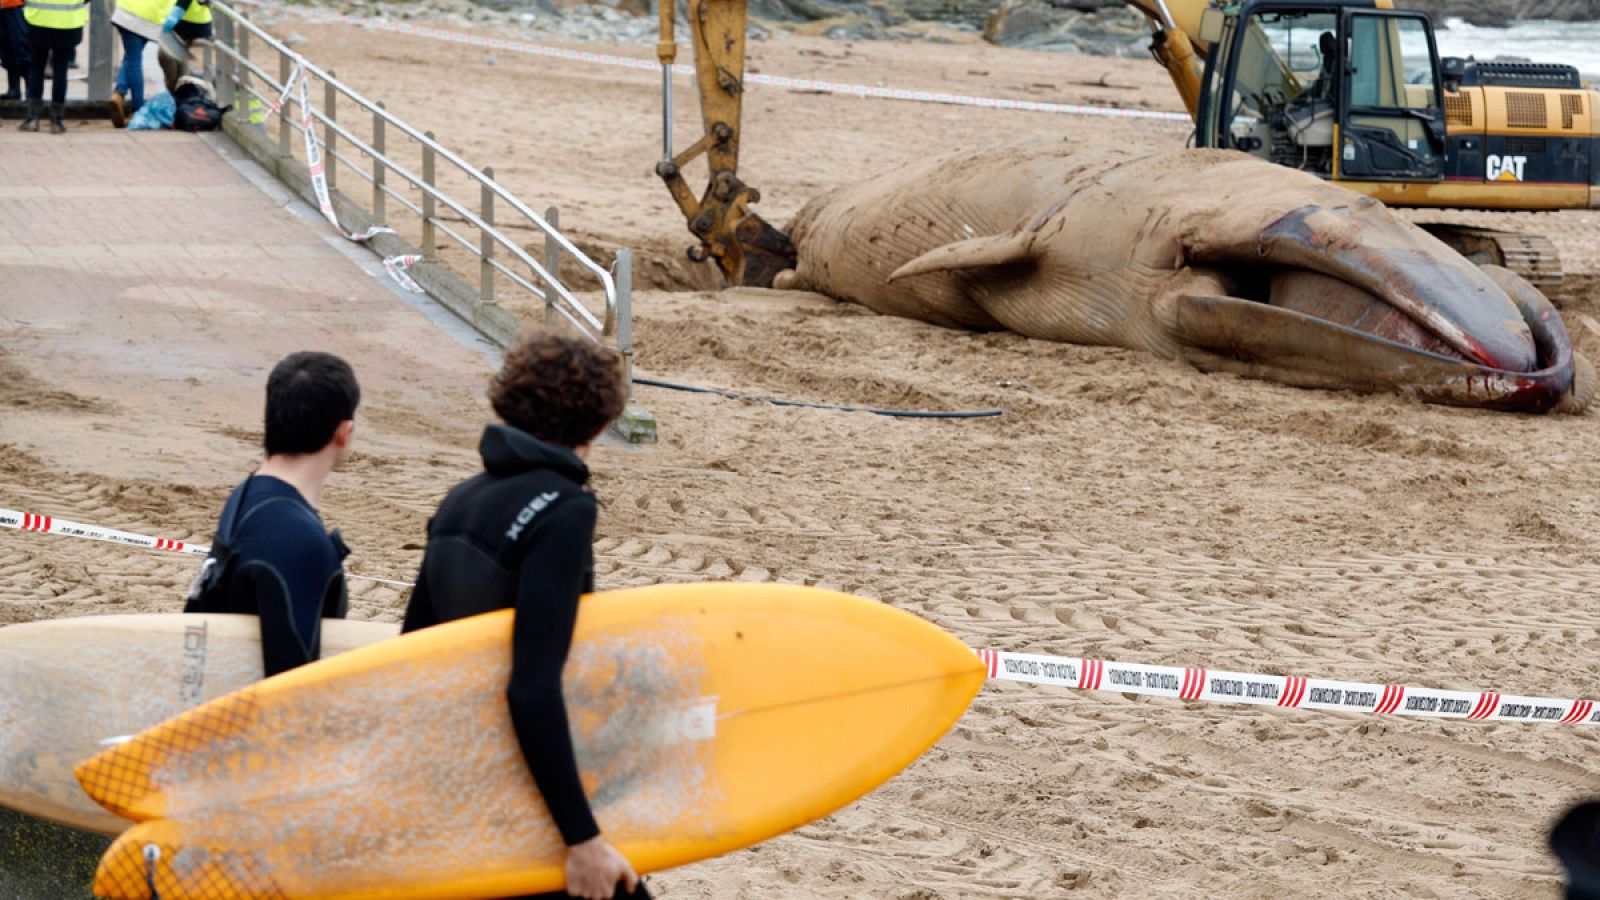 Telediario 1: Al menos siete ballenas aparecen varadas en las costas españolas | RTVE Play